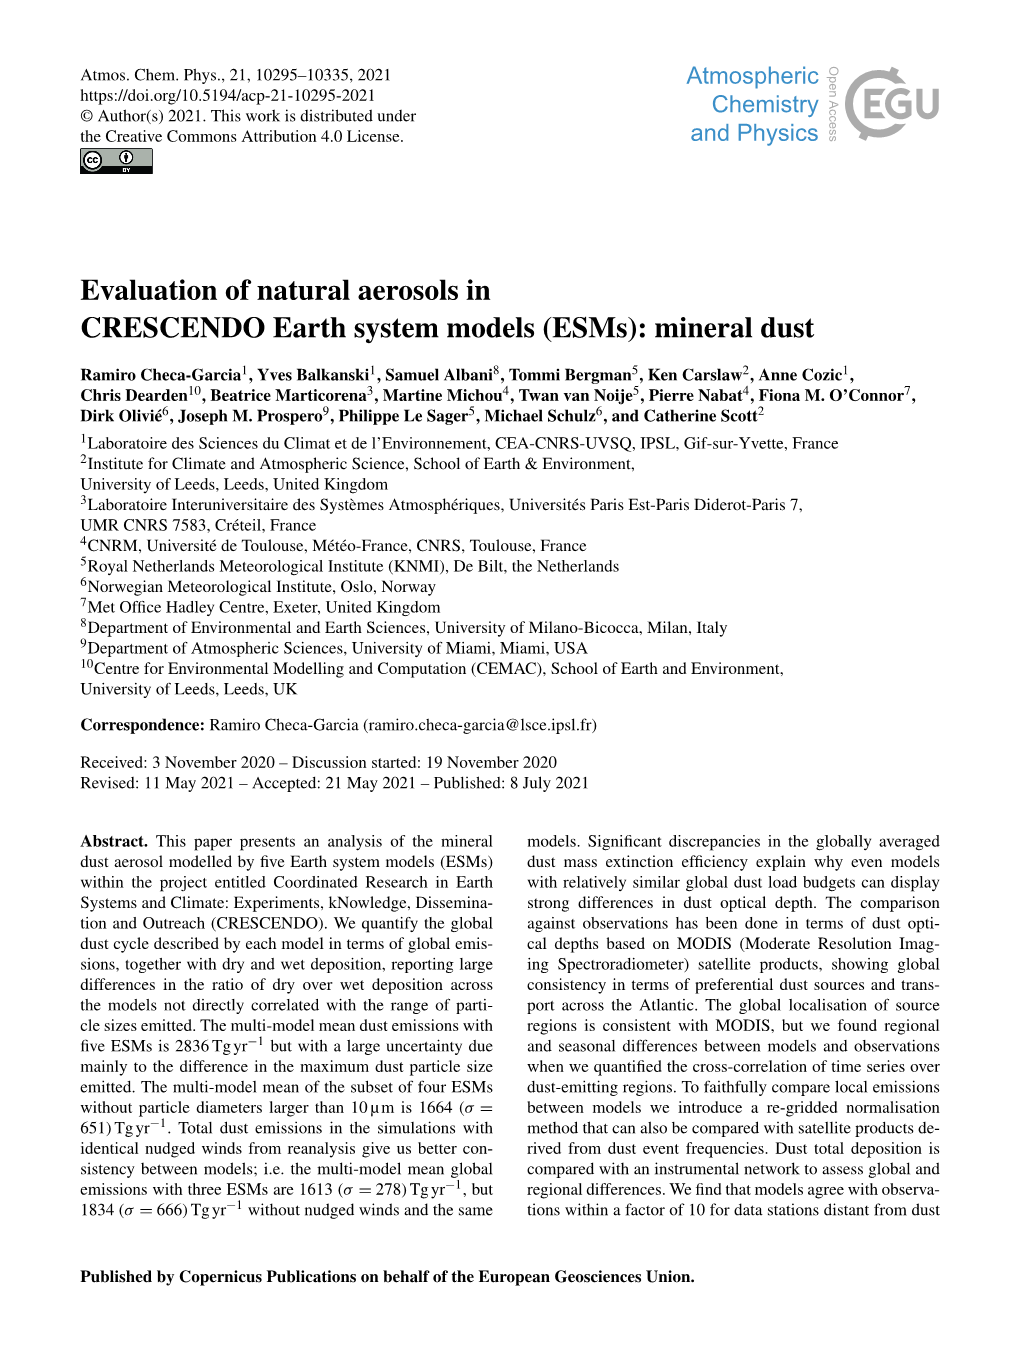 Evaluation of Natural Aerosols in CRESCENDO Earth System Models (Esms): Mineral Dust